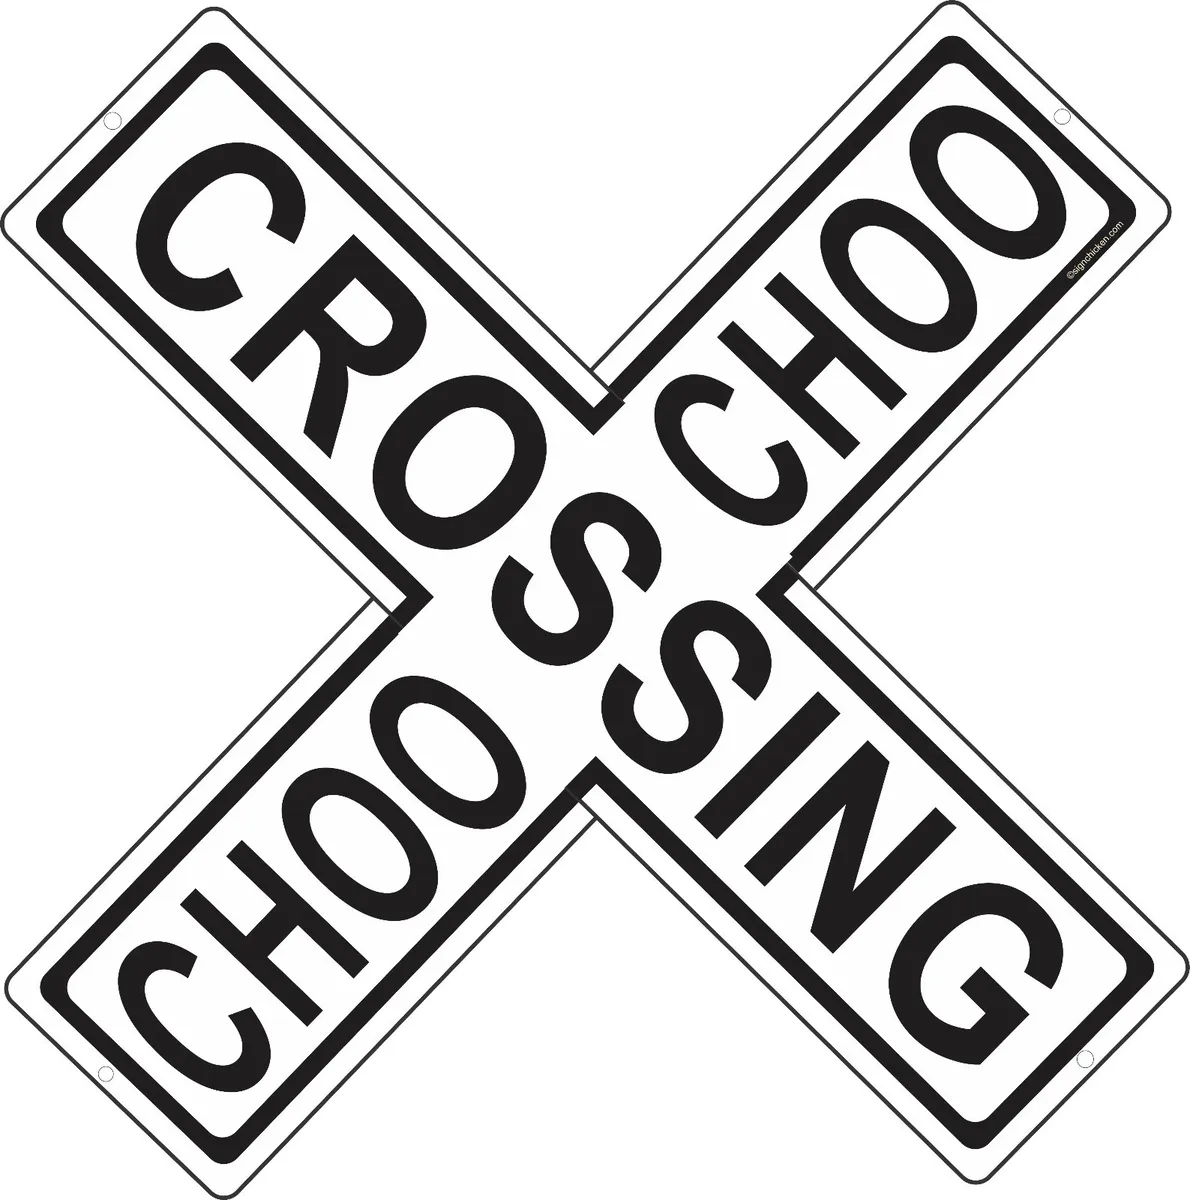 Choo choo crossing crossbuck sign train lootive railroad crossing